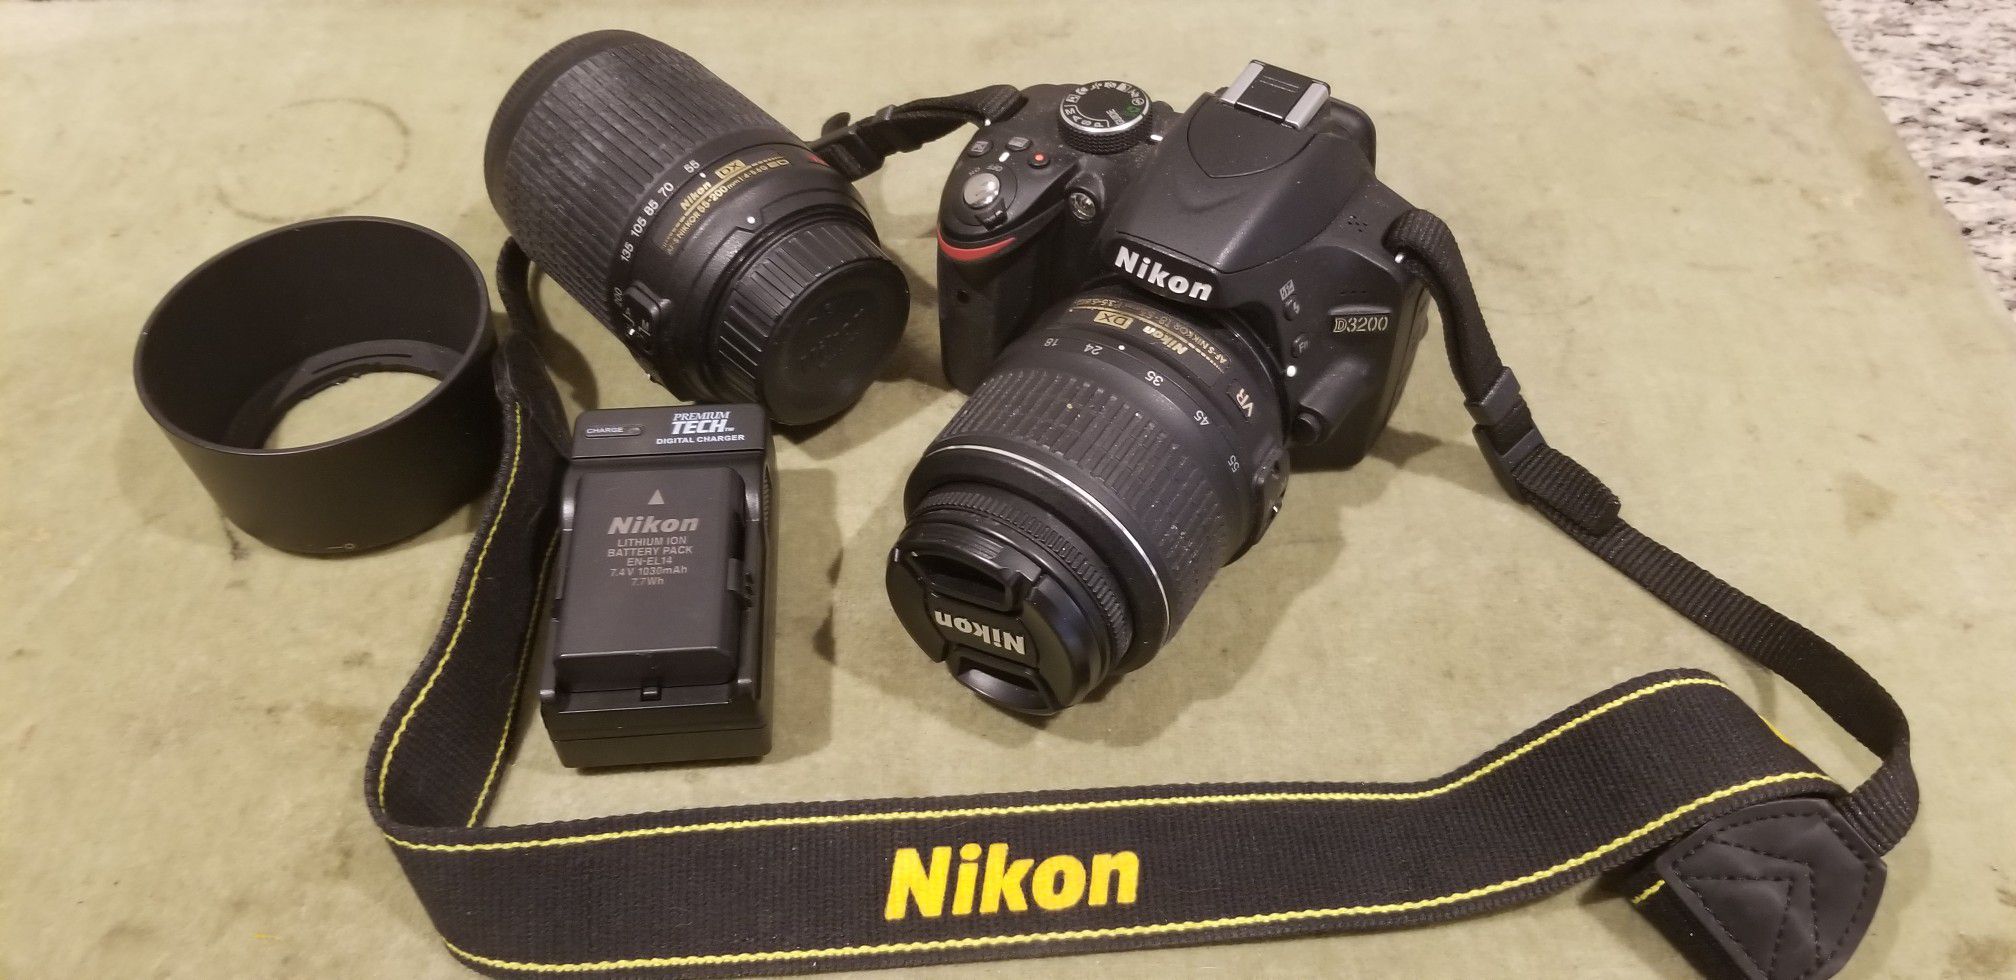 Nikon D3200 24.2 MP Digital SLR Camera Black w/ 18-55mm & 55-200mm Lens